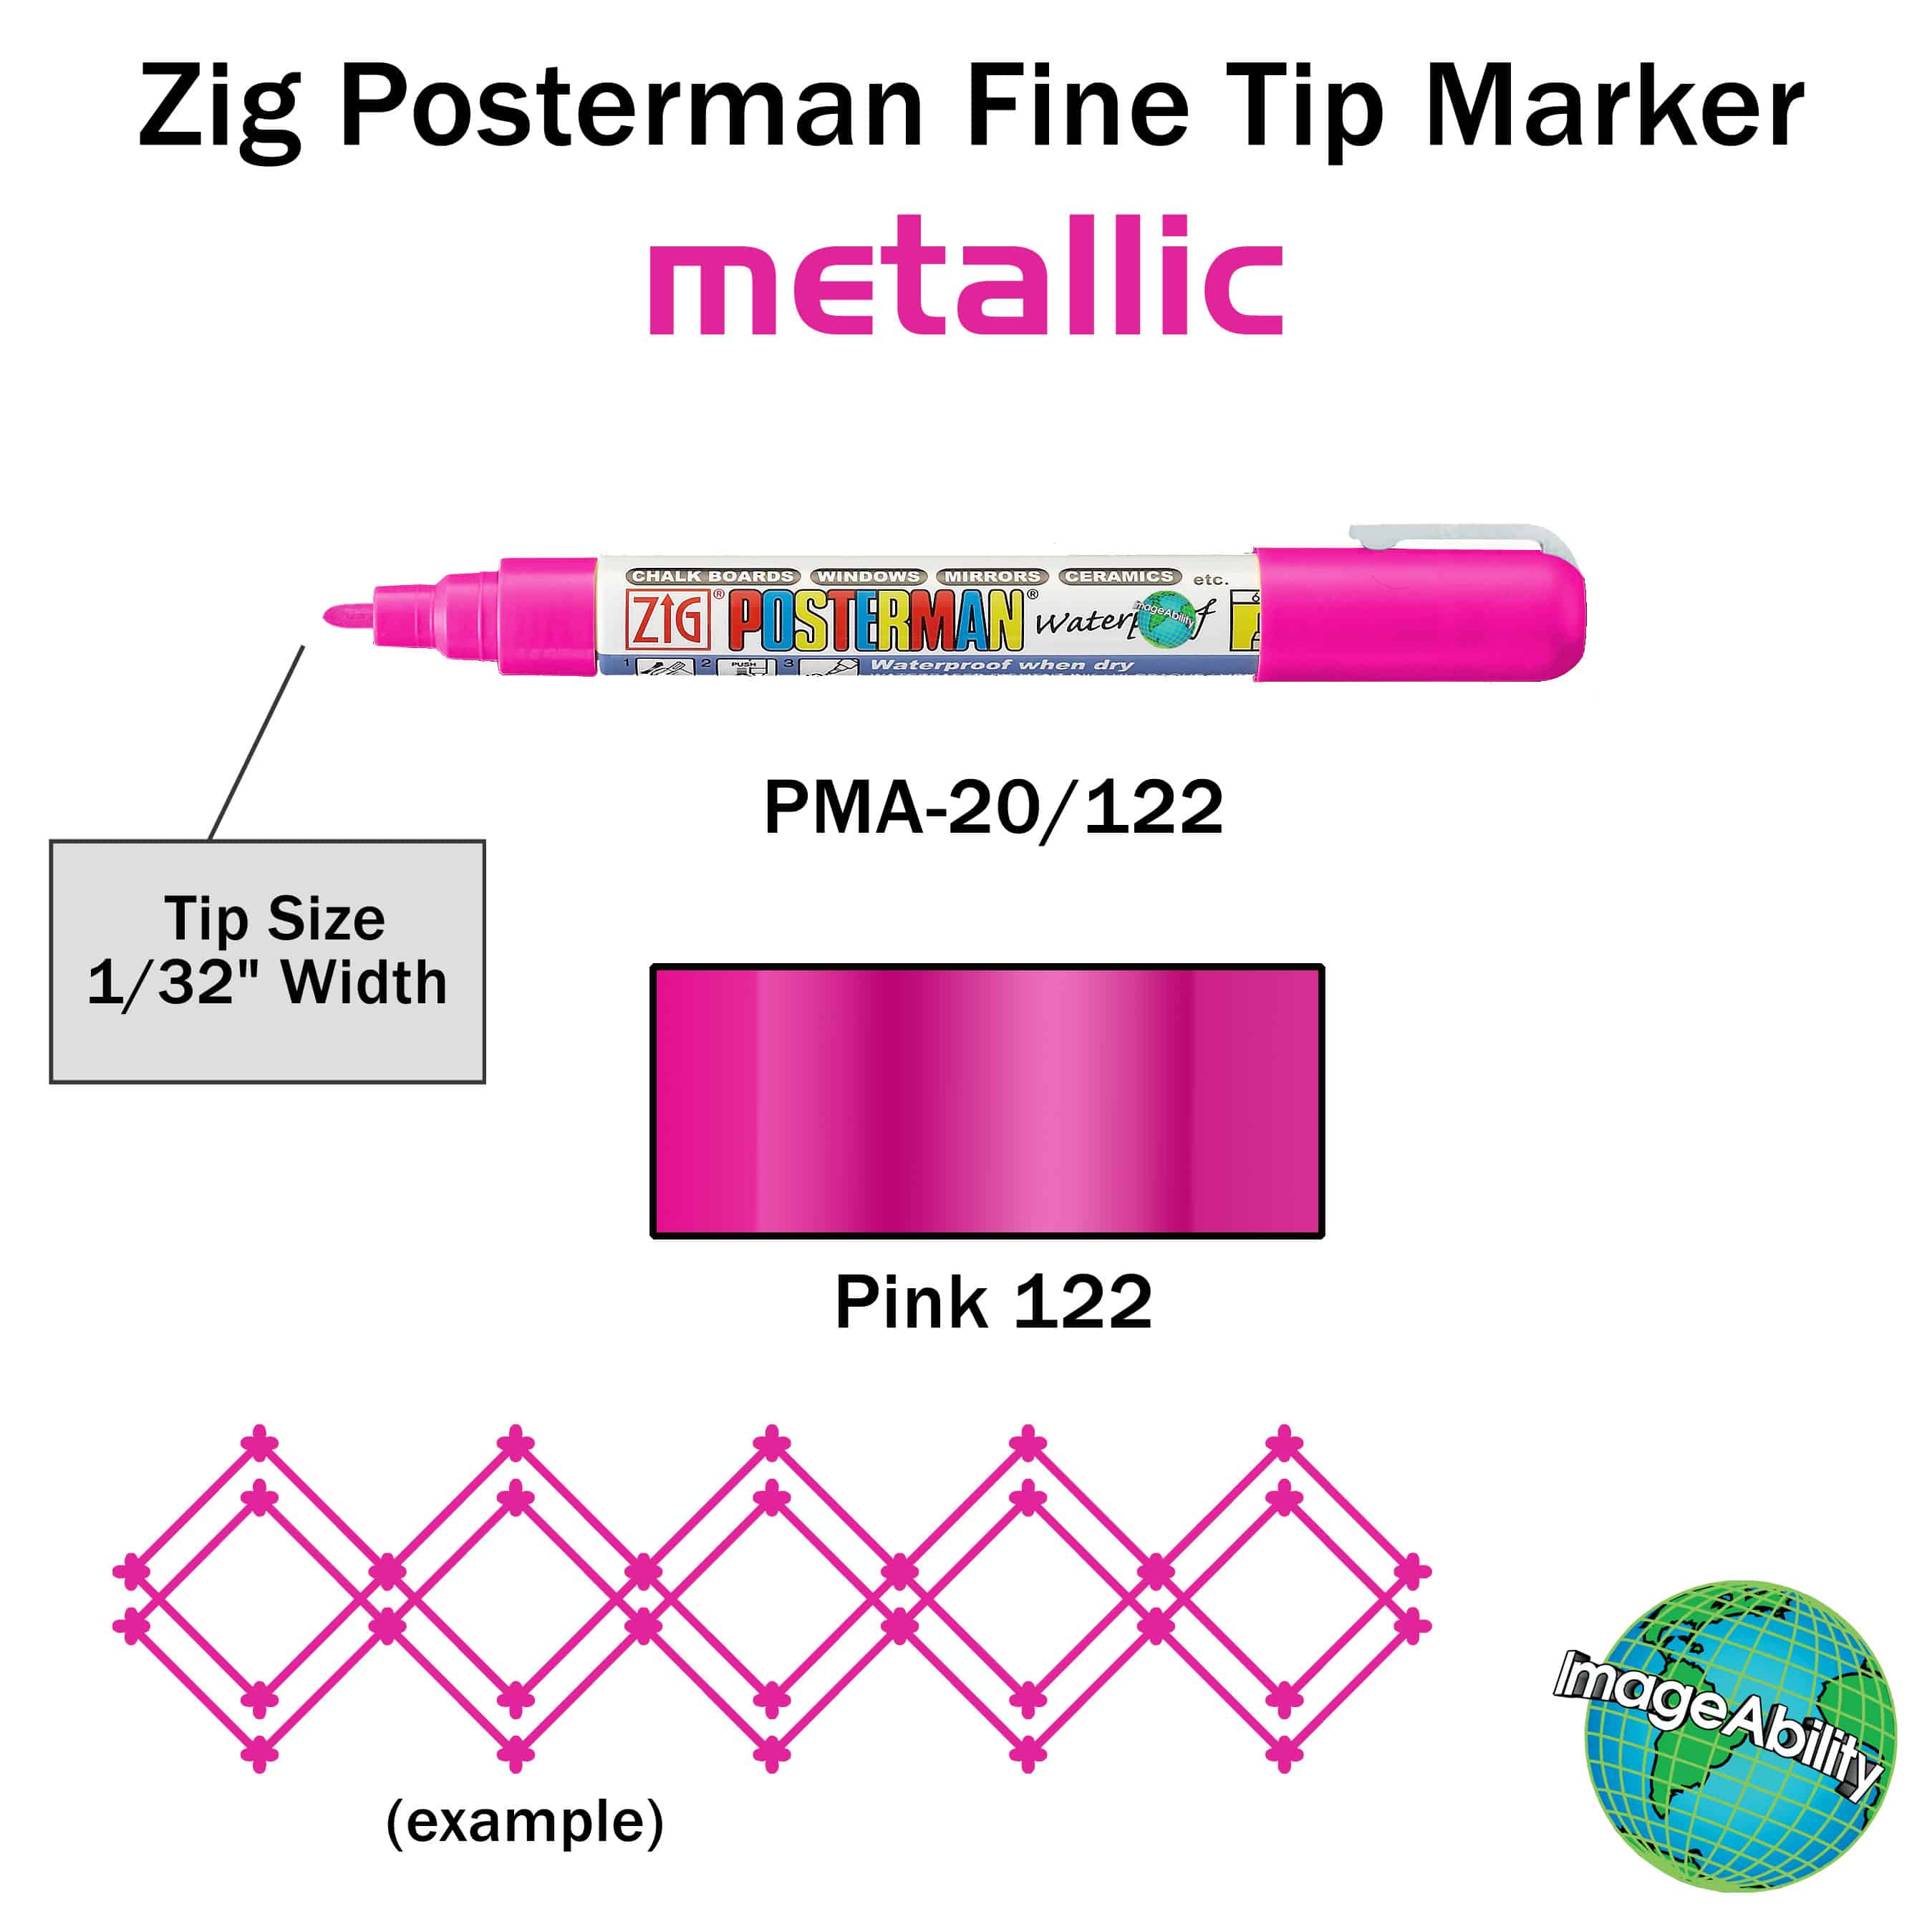 Details about Zig Posterman Metallic Pink Waterproof Fine 1mm Tip Marker SKU PMA-20-122 UPC 847340001041